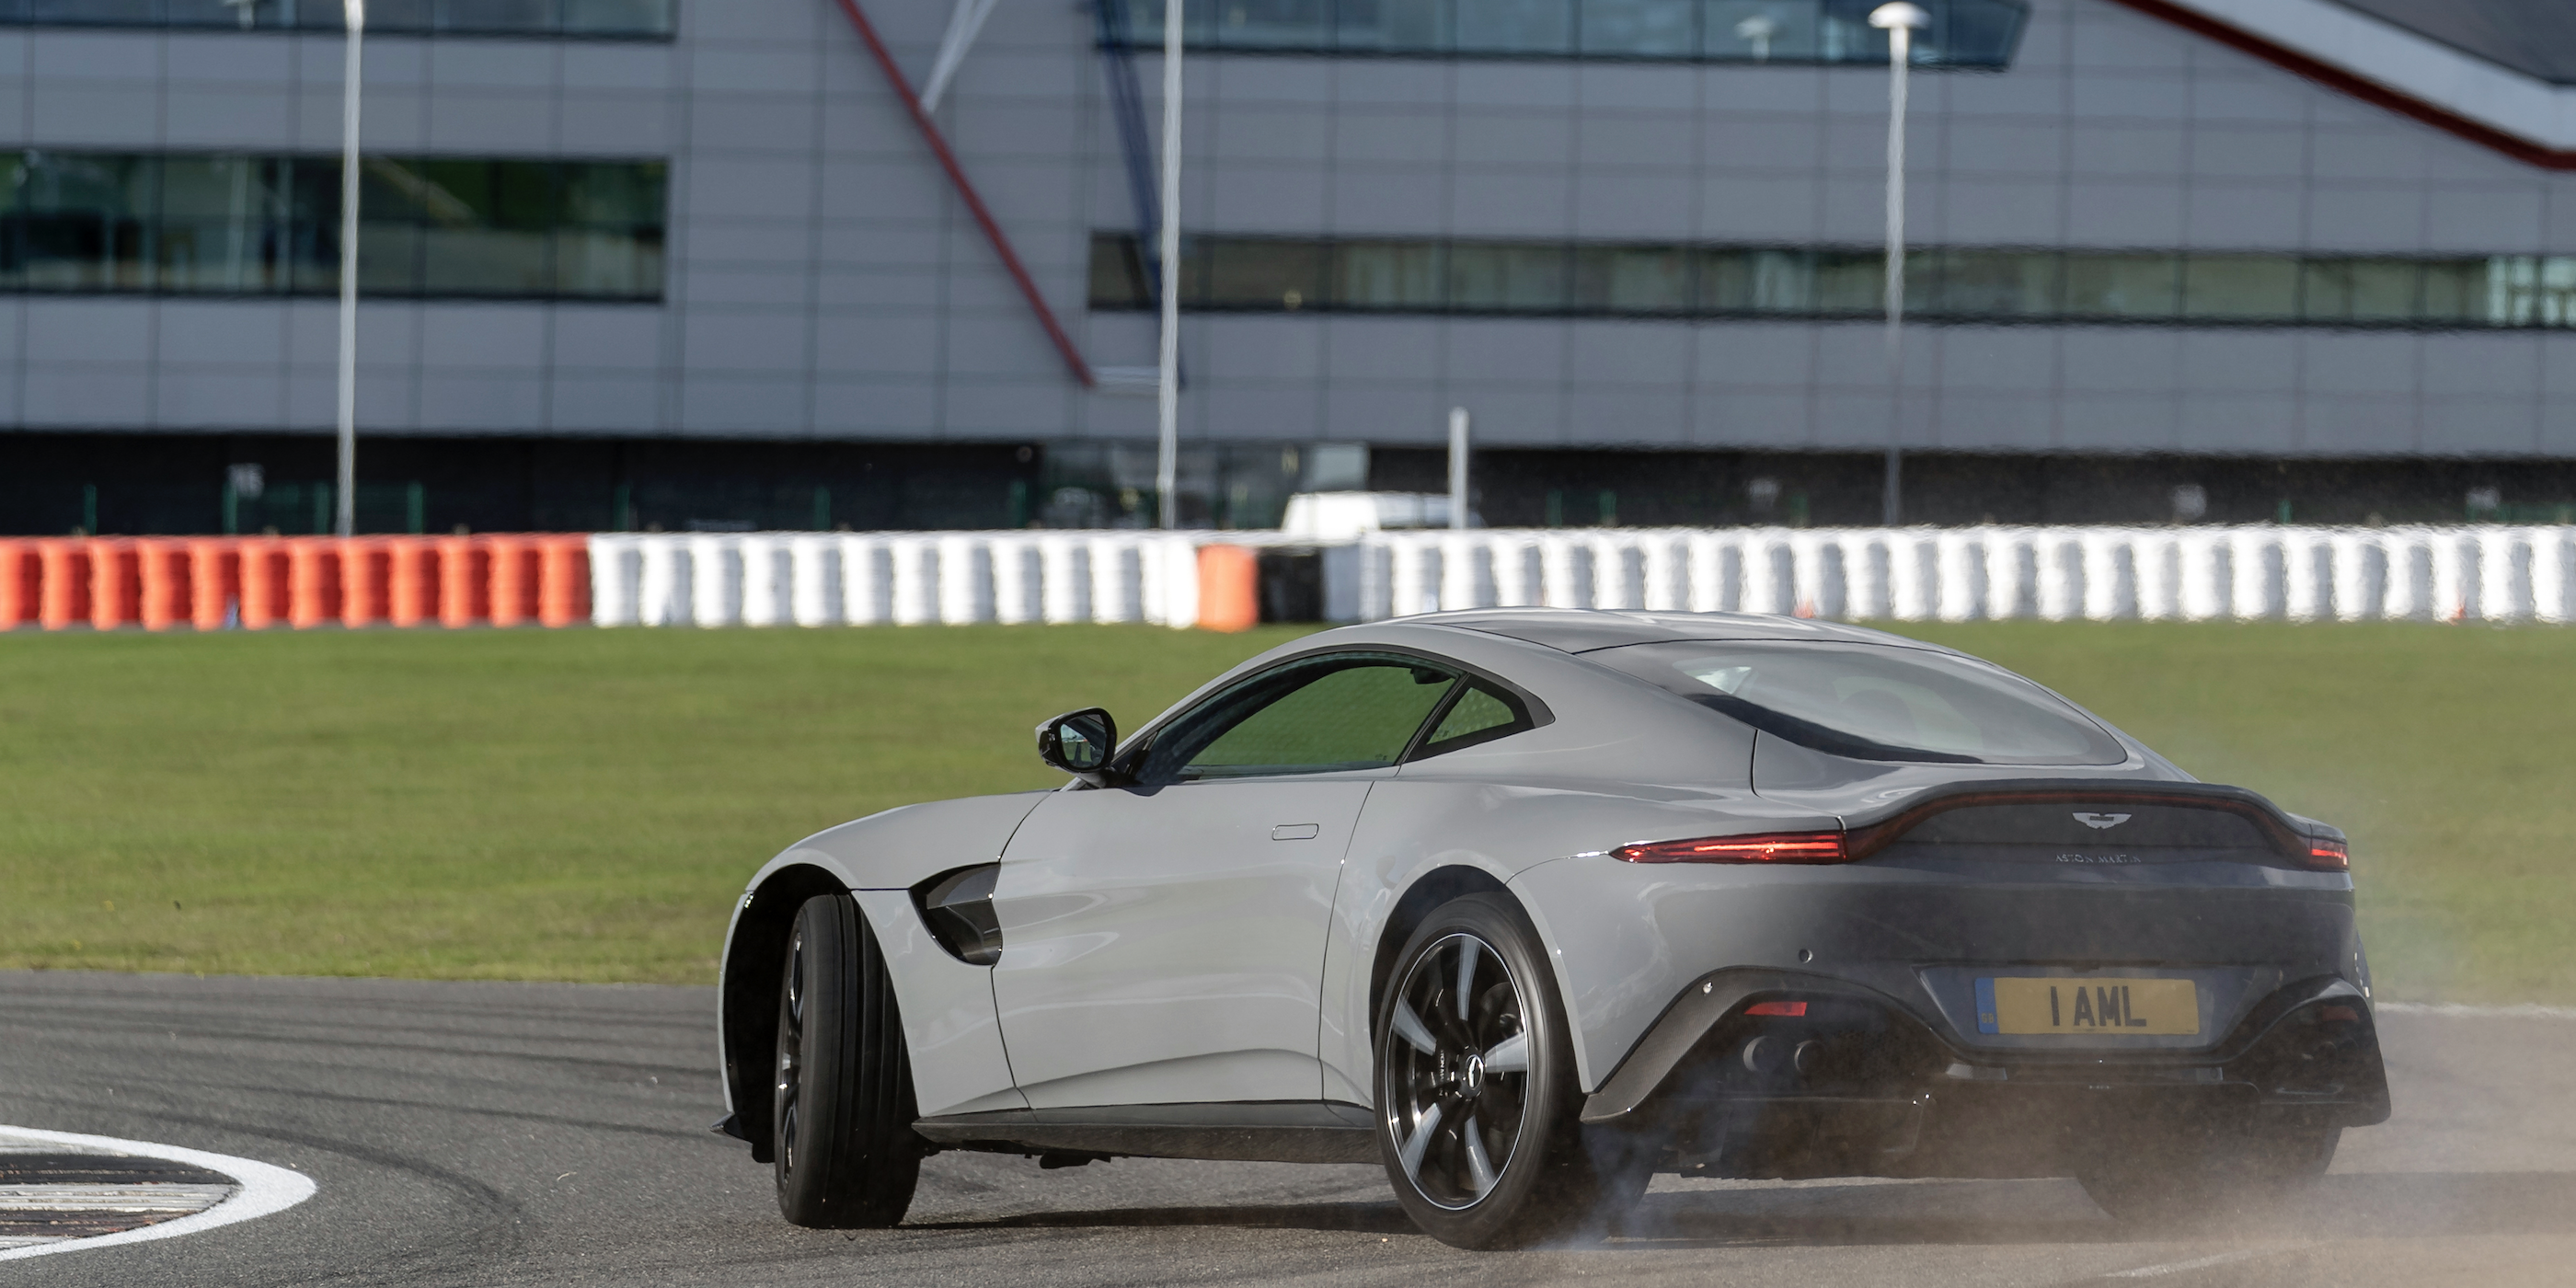 Aston Martin's dynamics team moves into Silverstone | Vehicle Dynamics